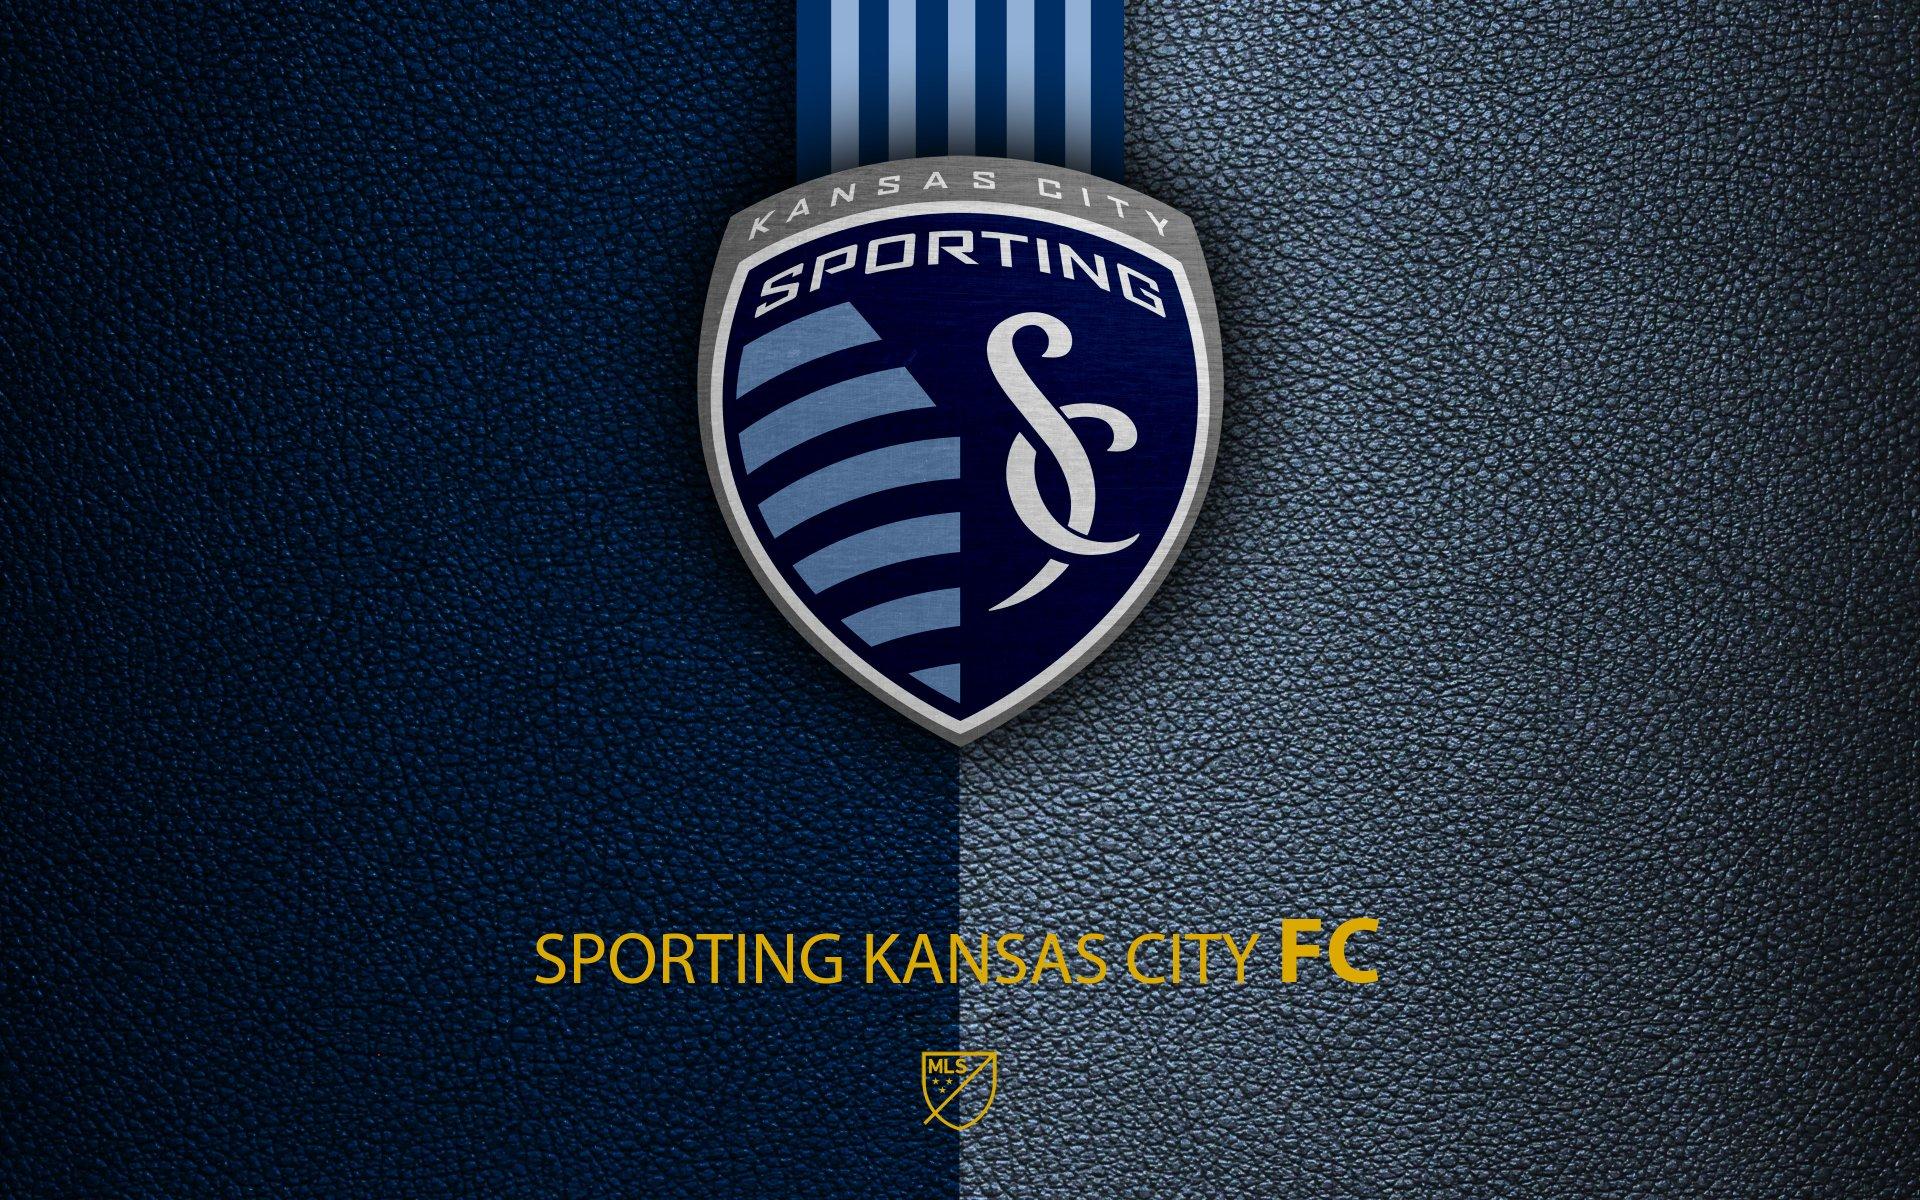 Sporting Kansas City 4k Ultra HD Wallpaper. Background Image